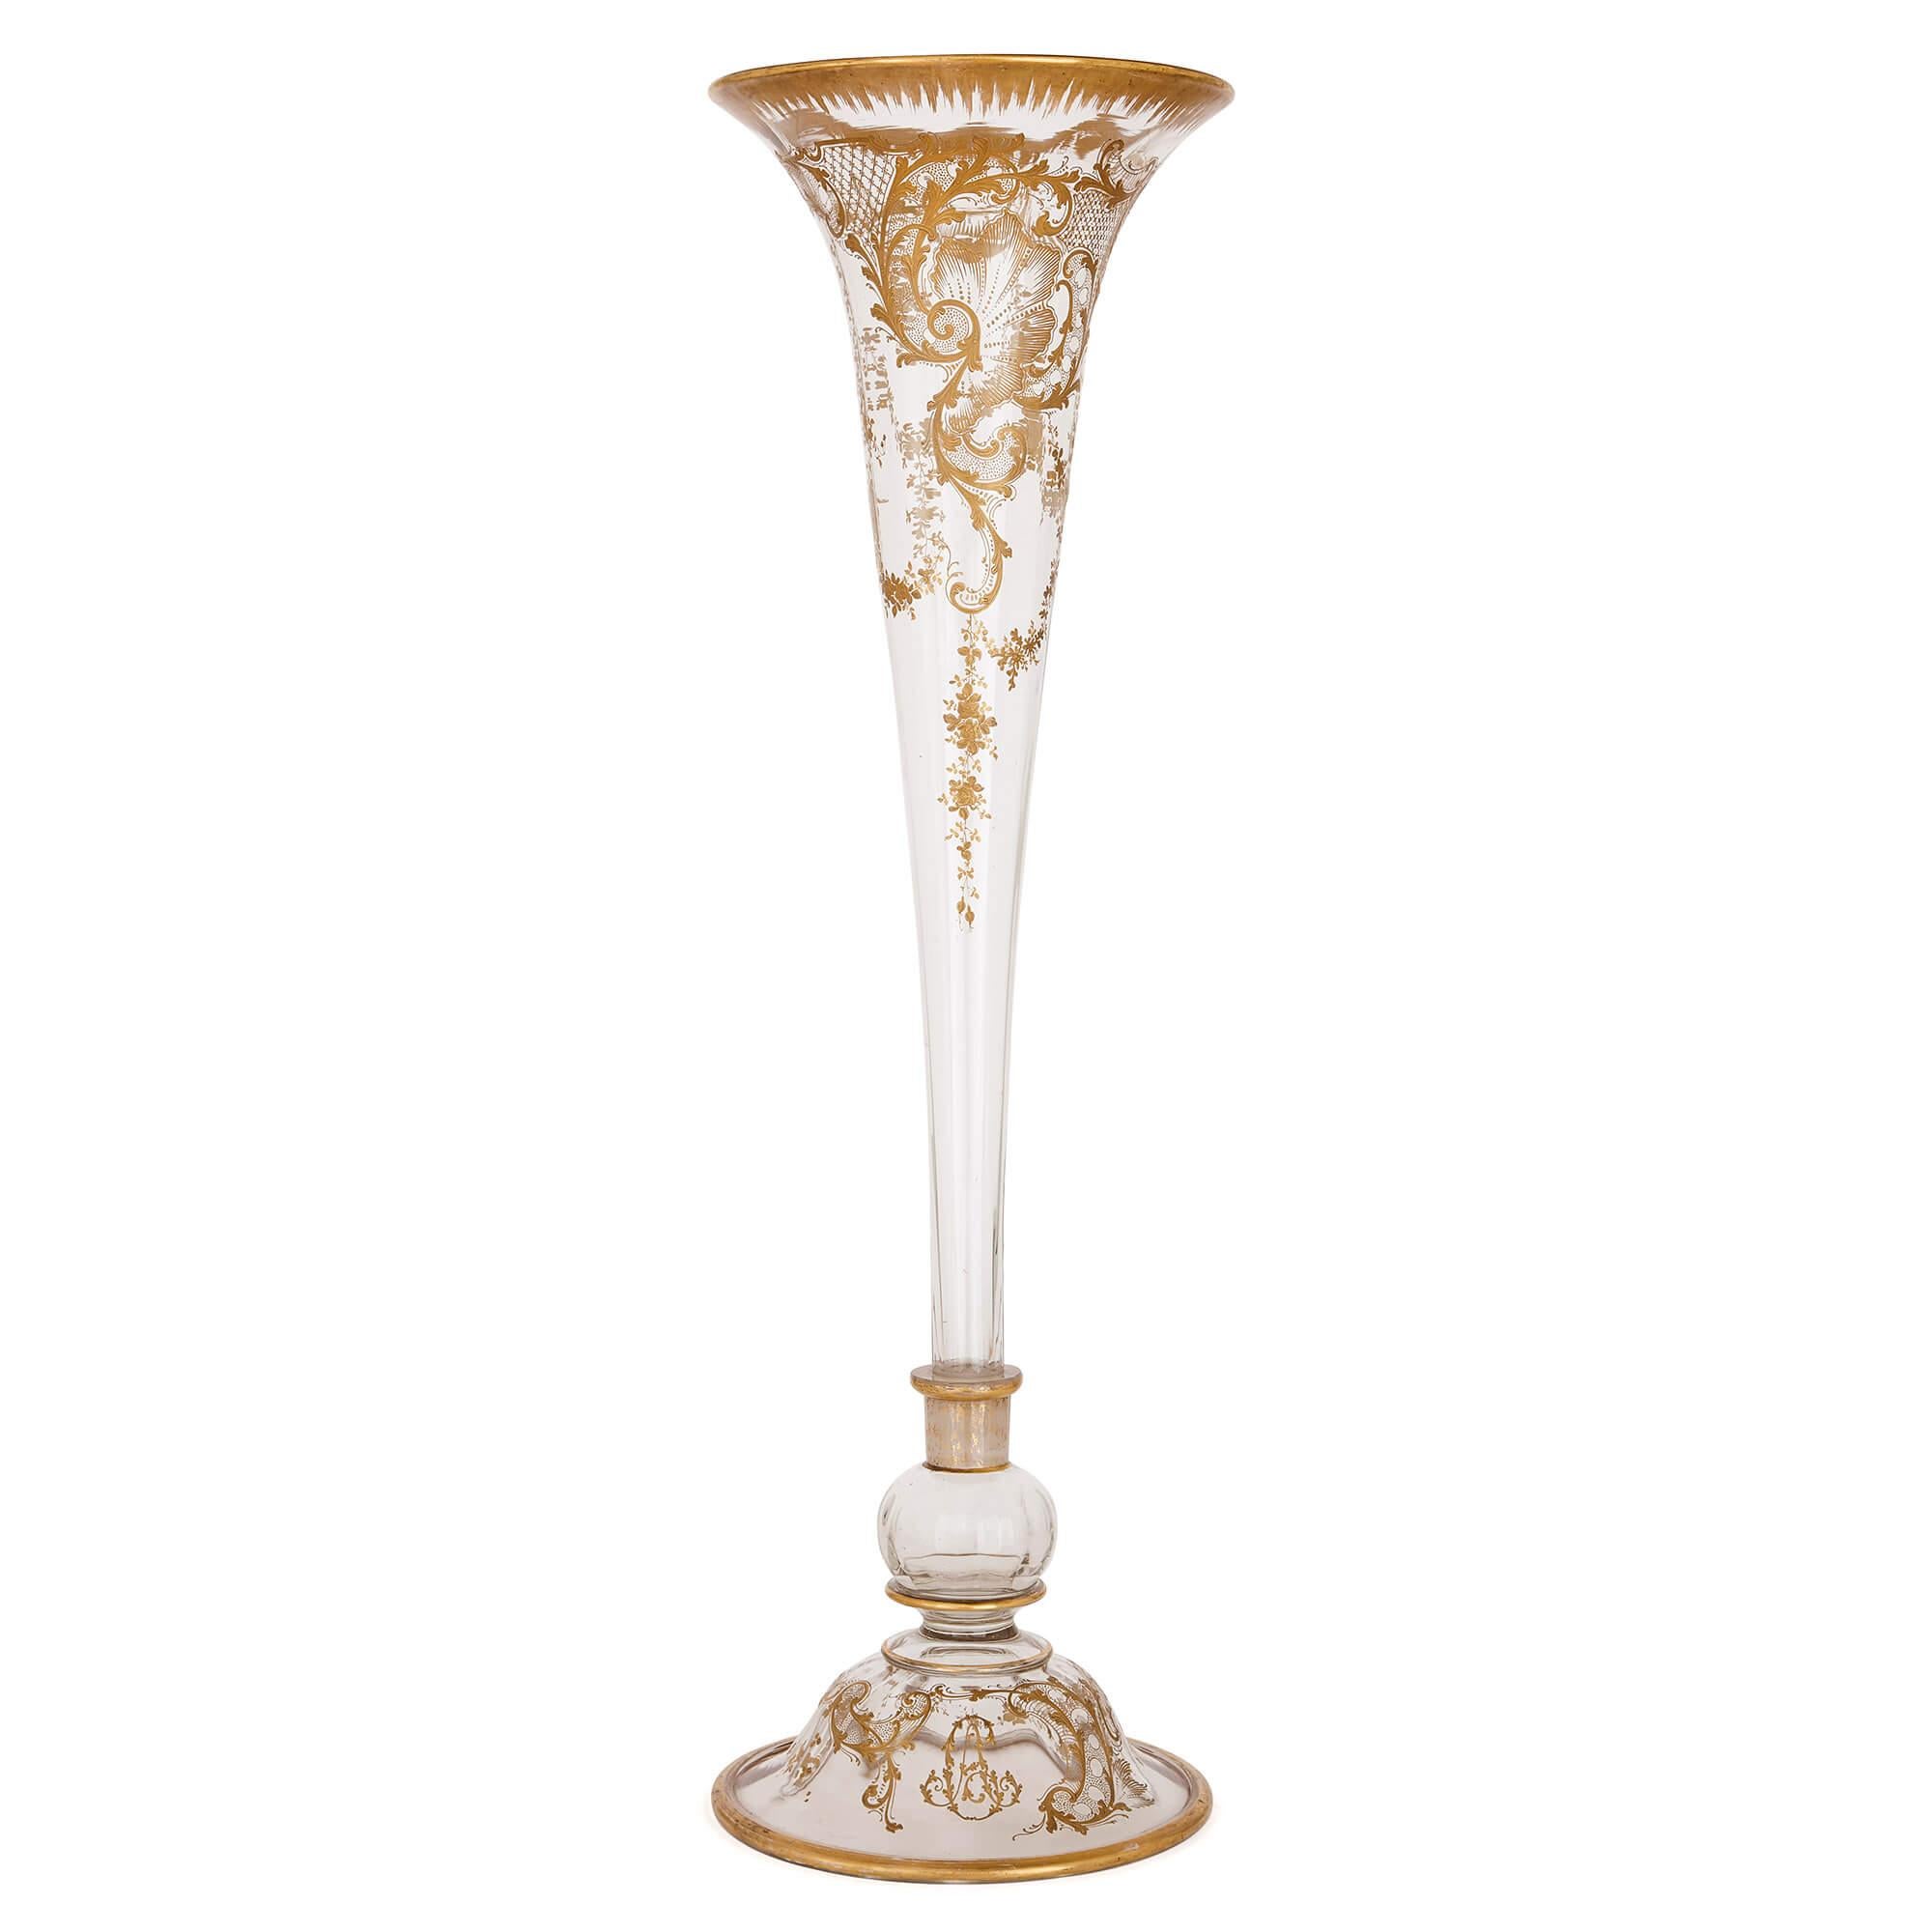 19th Century Gilt and Bohemian Glass Vase